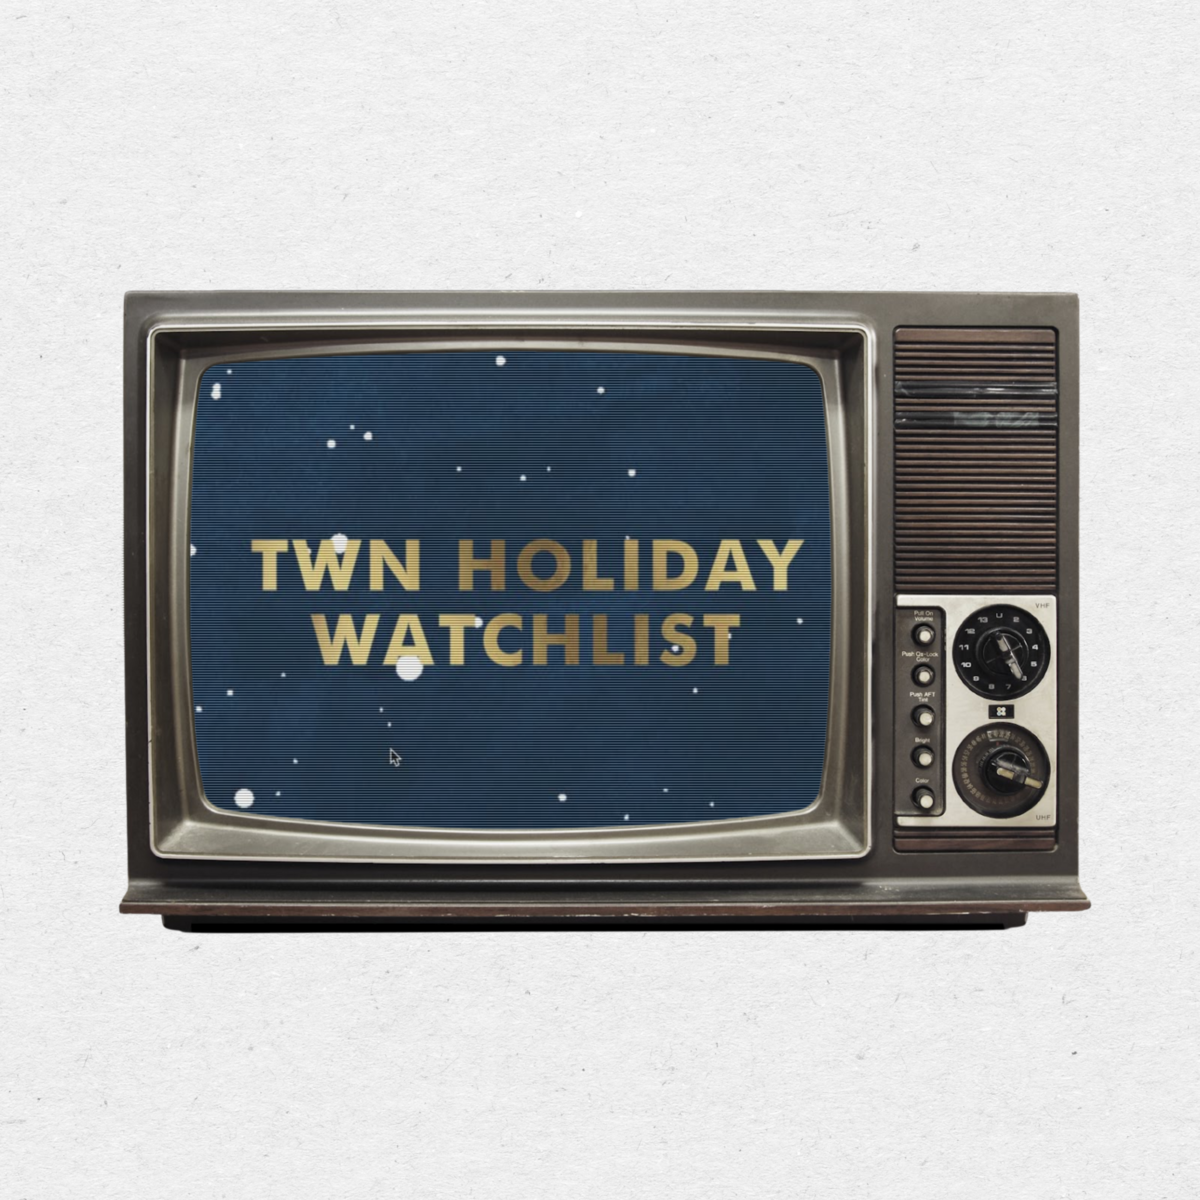 TWN Holiday Watchlist